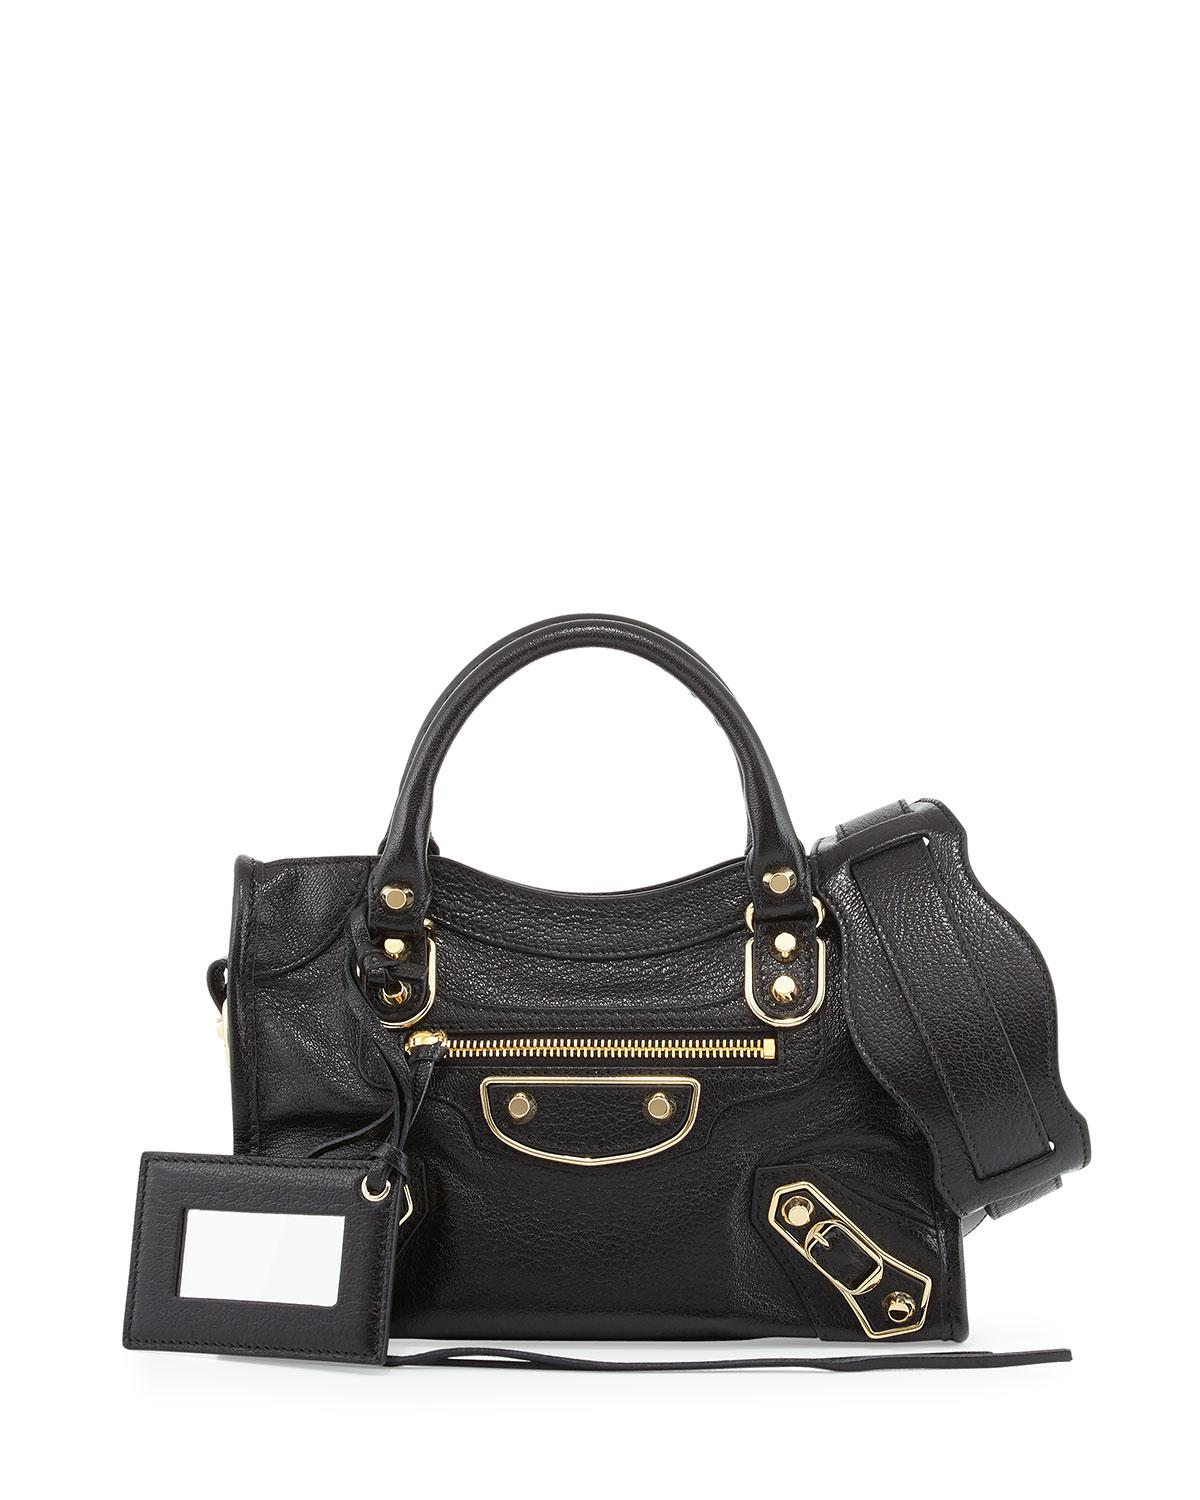 Balenciaga Leather Metallic Edge City Mini Bag, Black - Lyst